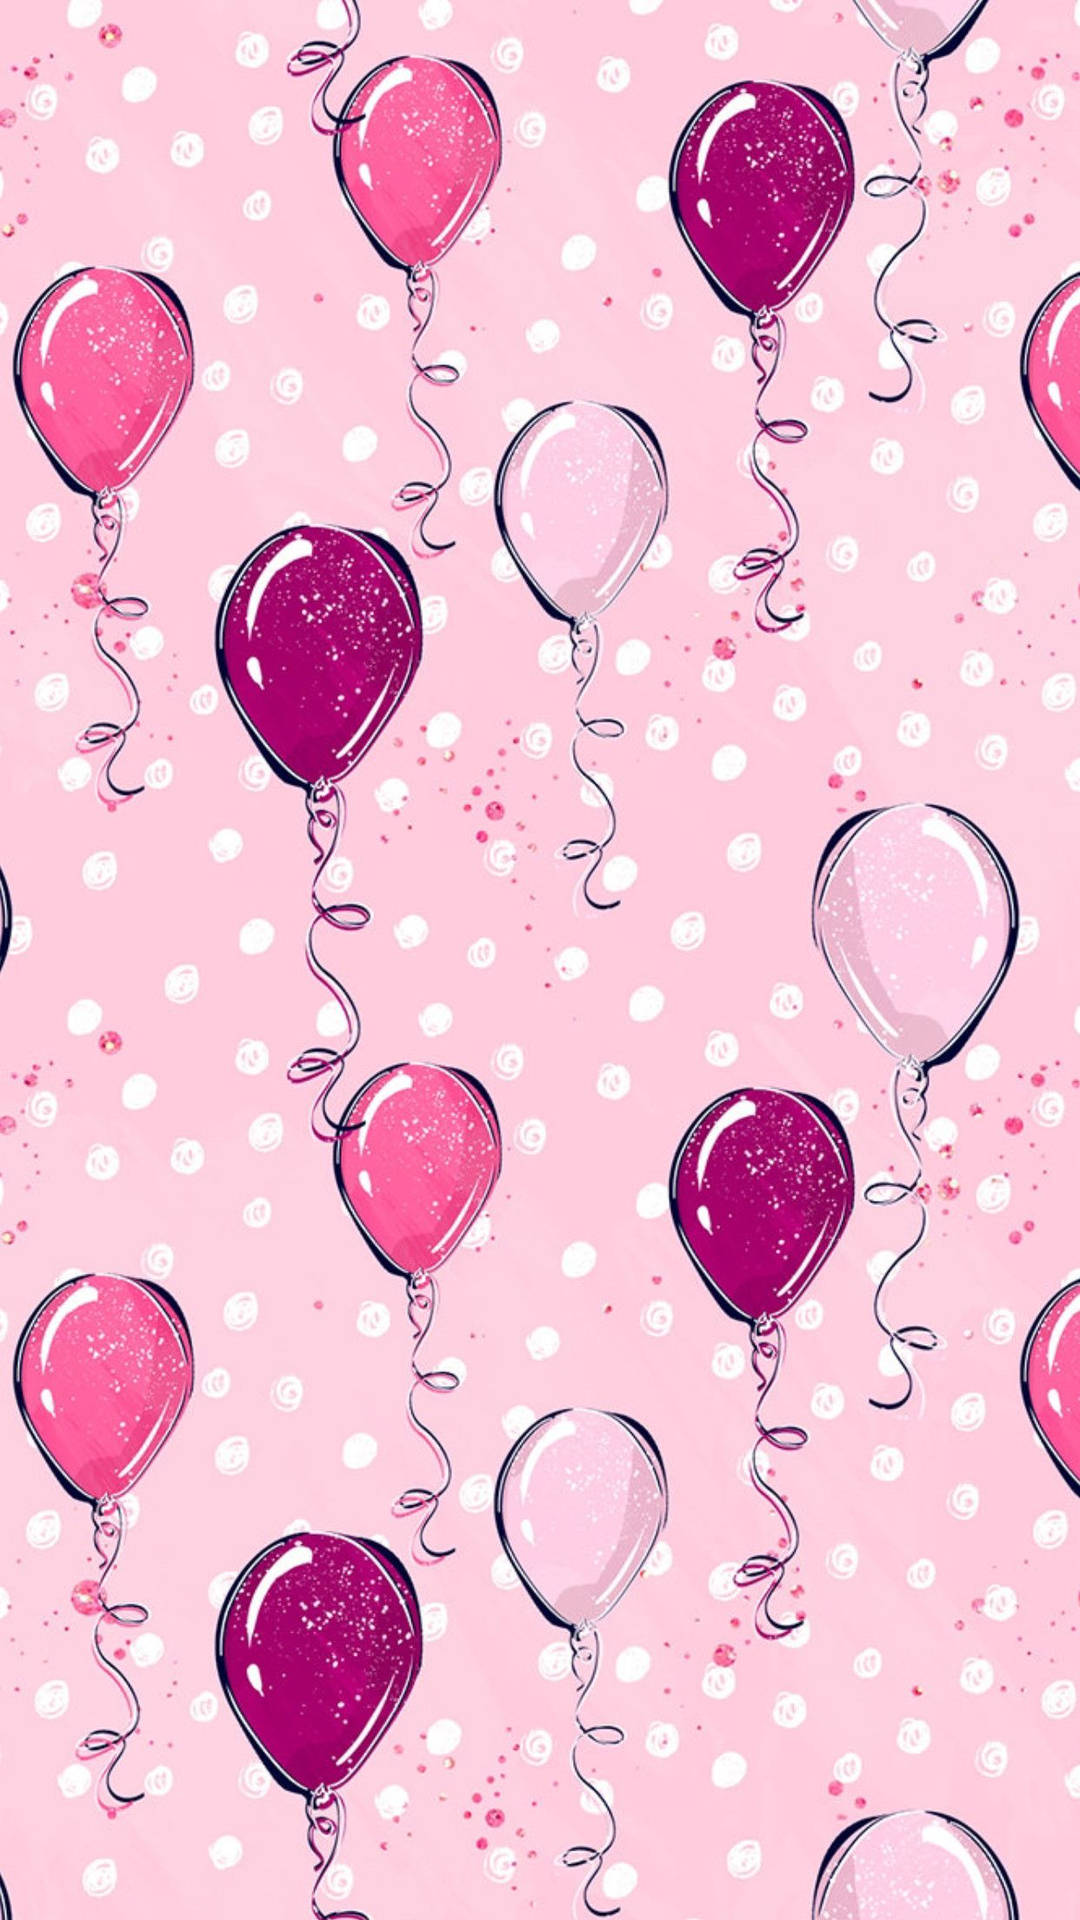 Cute Mobile Balloon Art Wallpaper